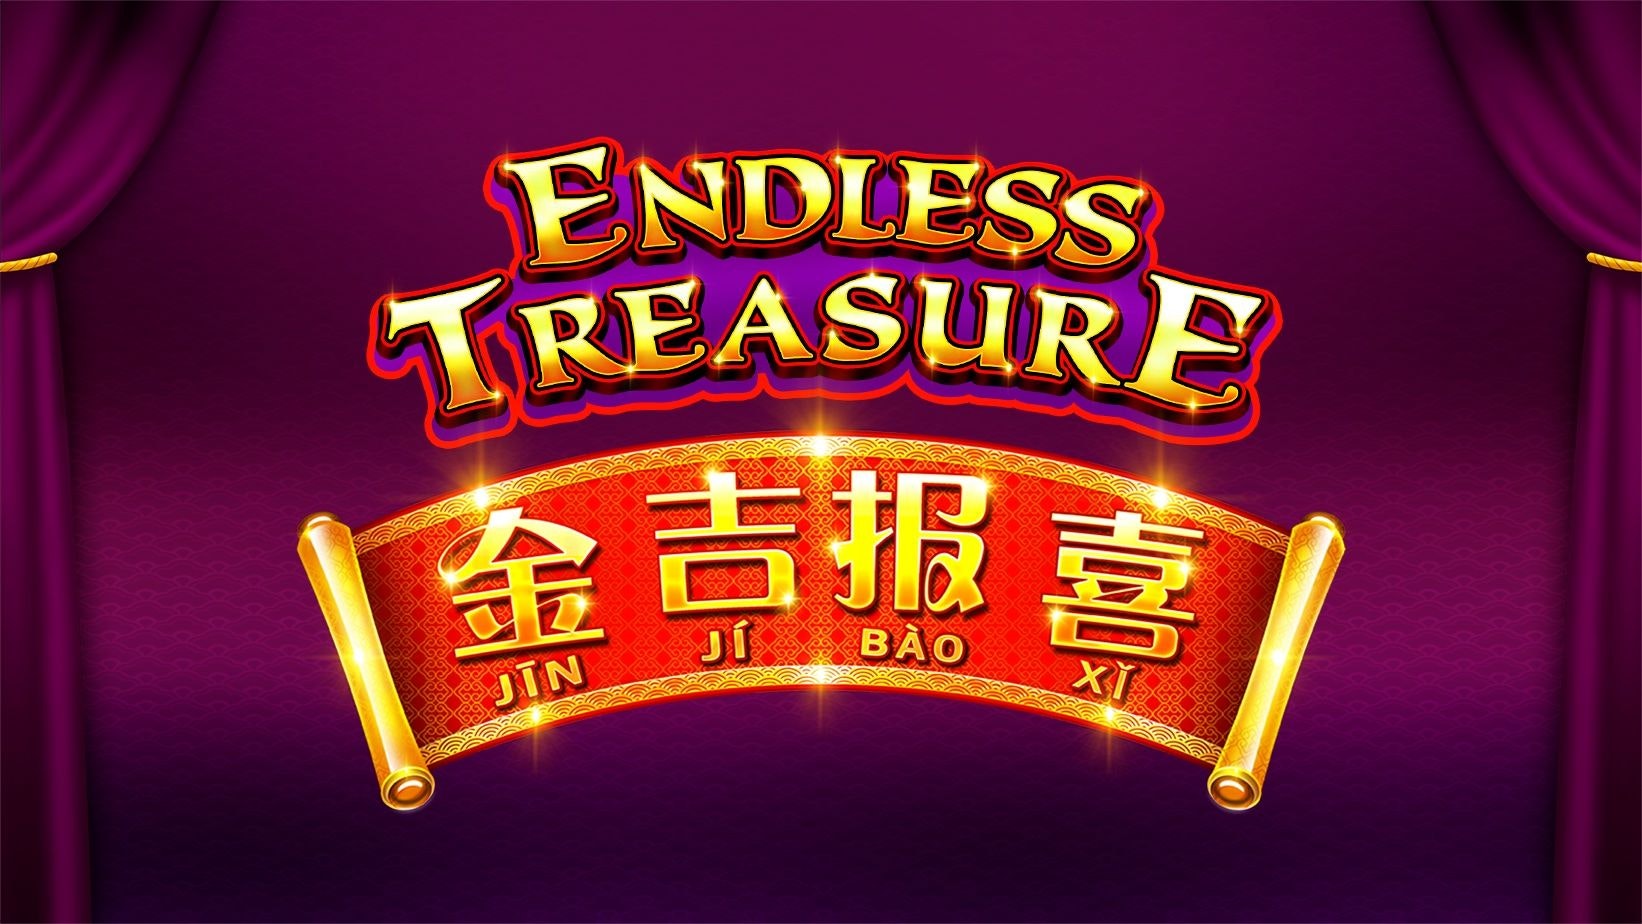 Play SG Digital's Jin Ji Bao Xi Endless Treasure Slot Machine Online for Free or Real Money